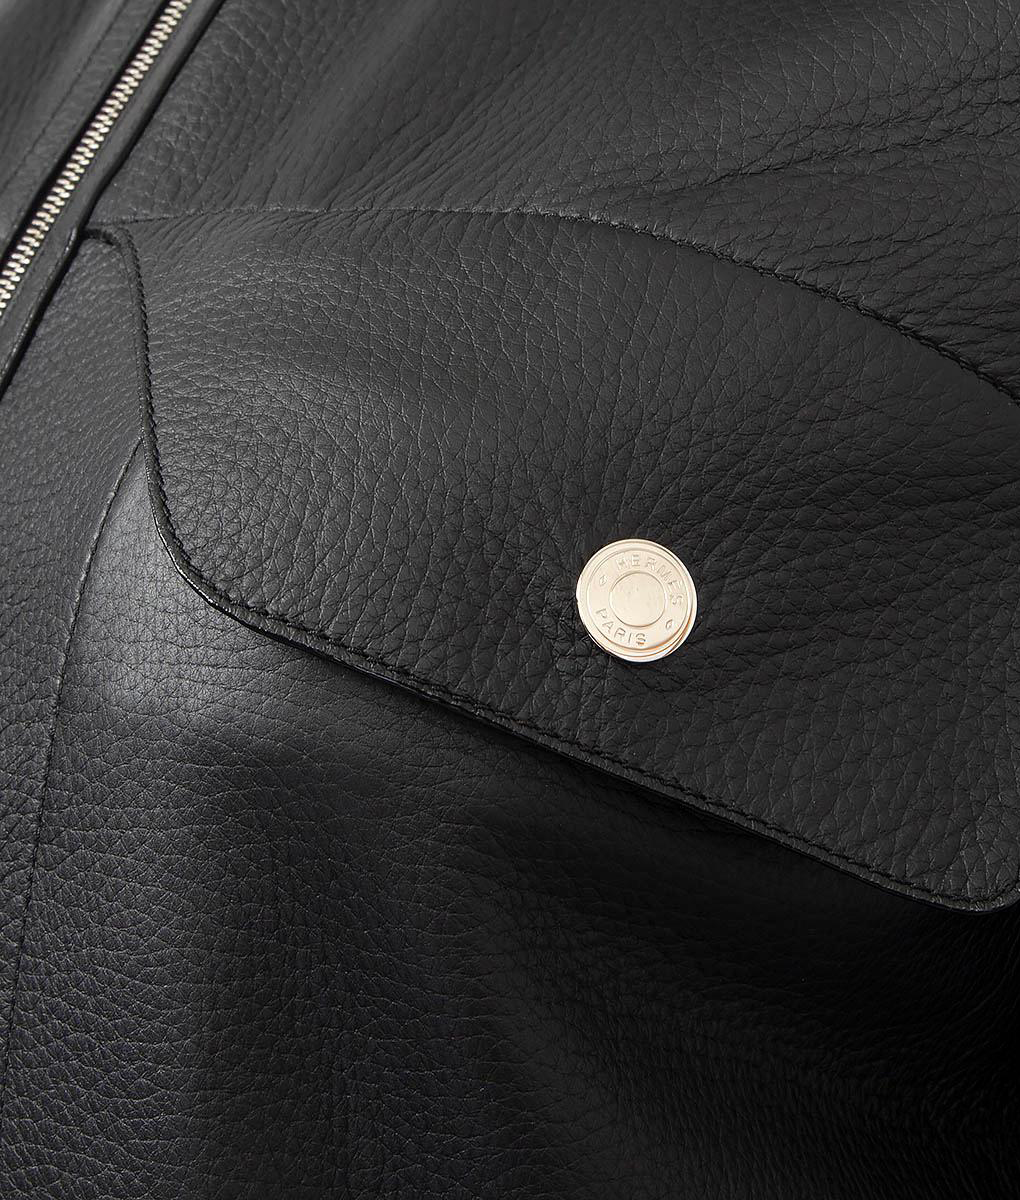 Celina Black Leather Jacket